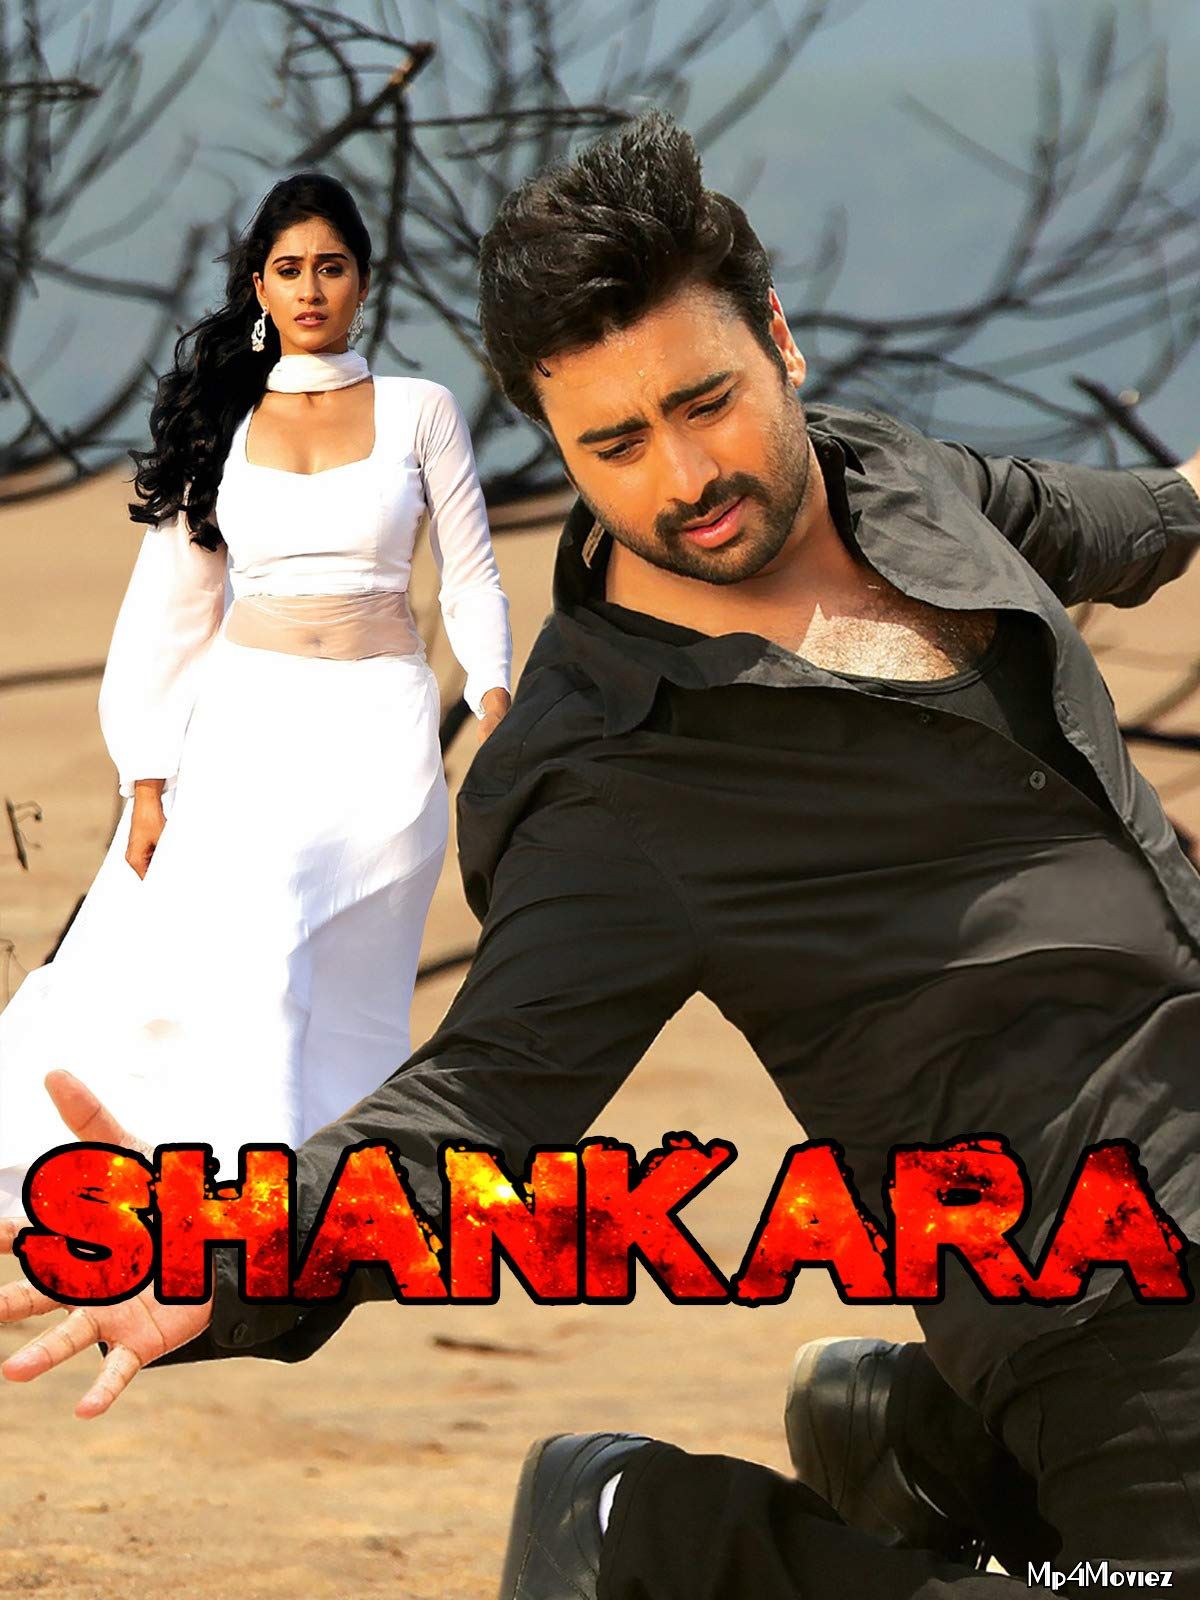 Shankara 2020 Hindi Dubbed Movie download full movie